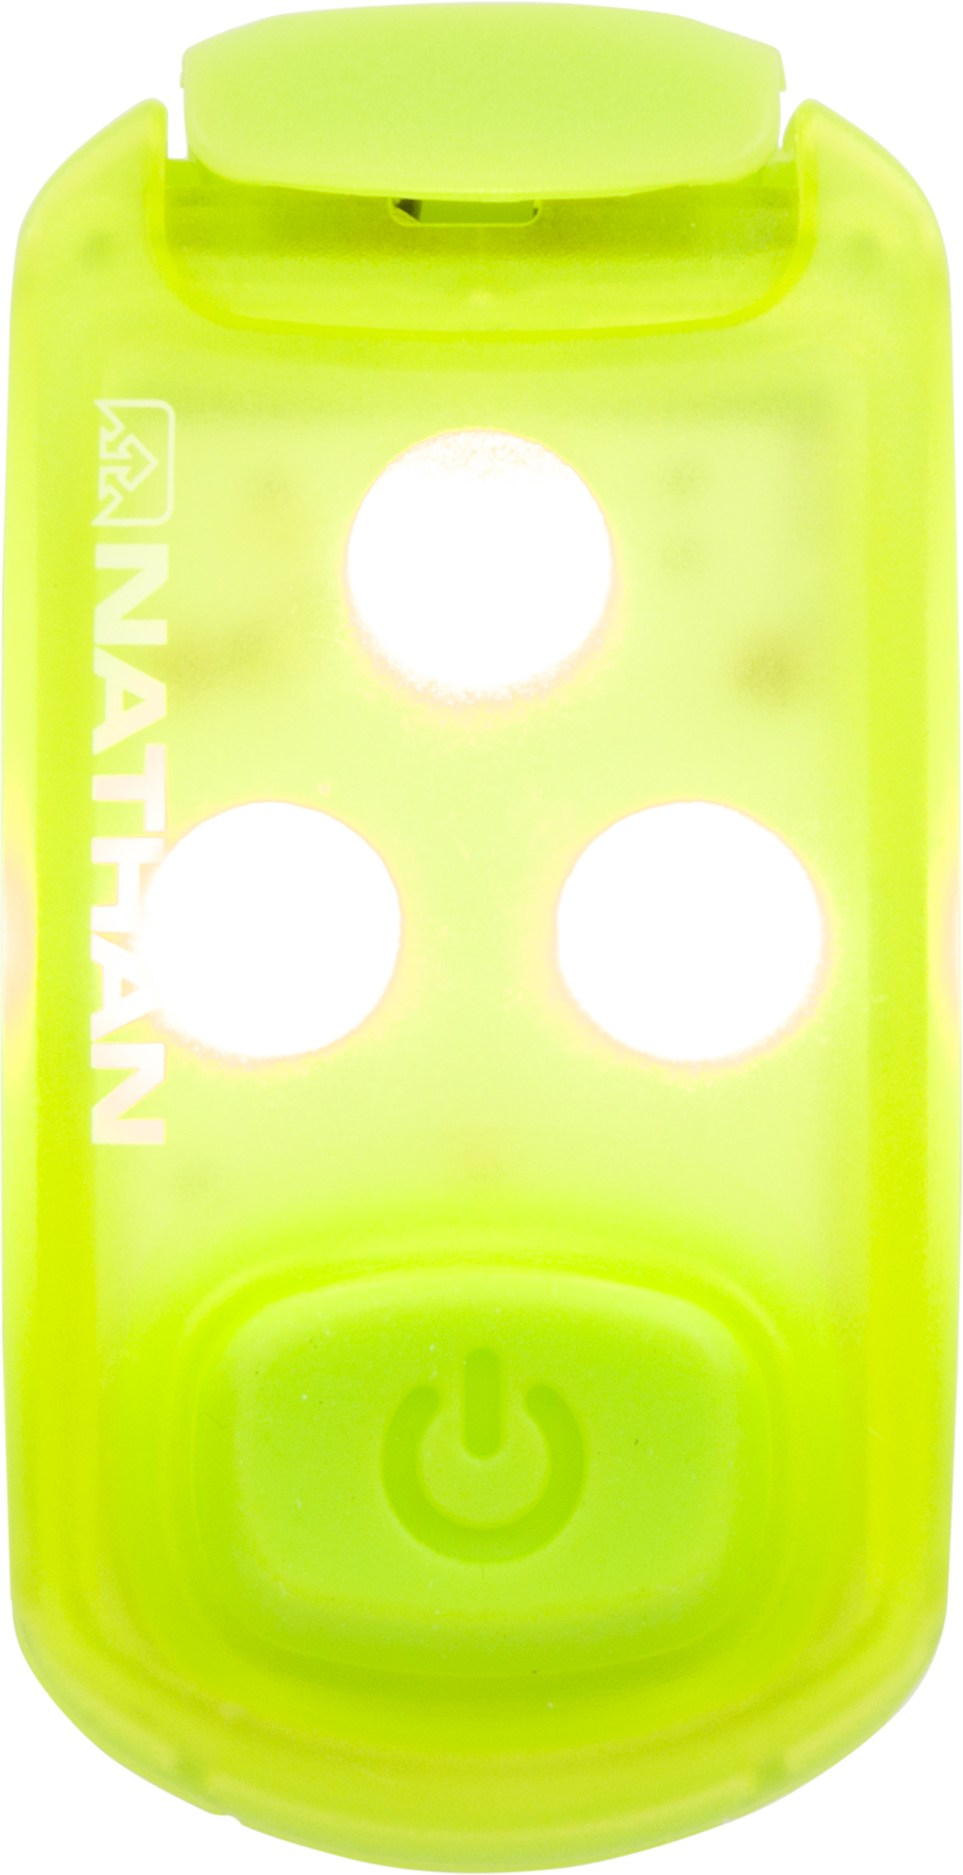 strobelight-safety-yellow